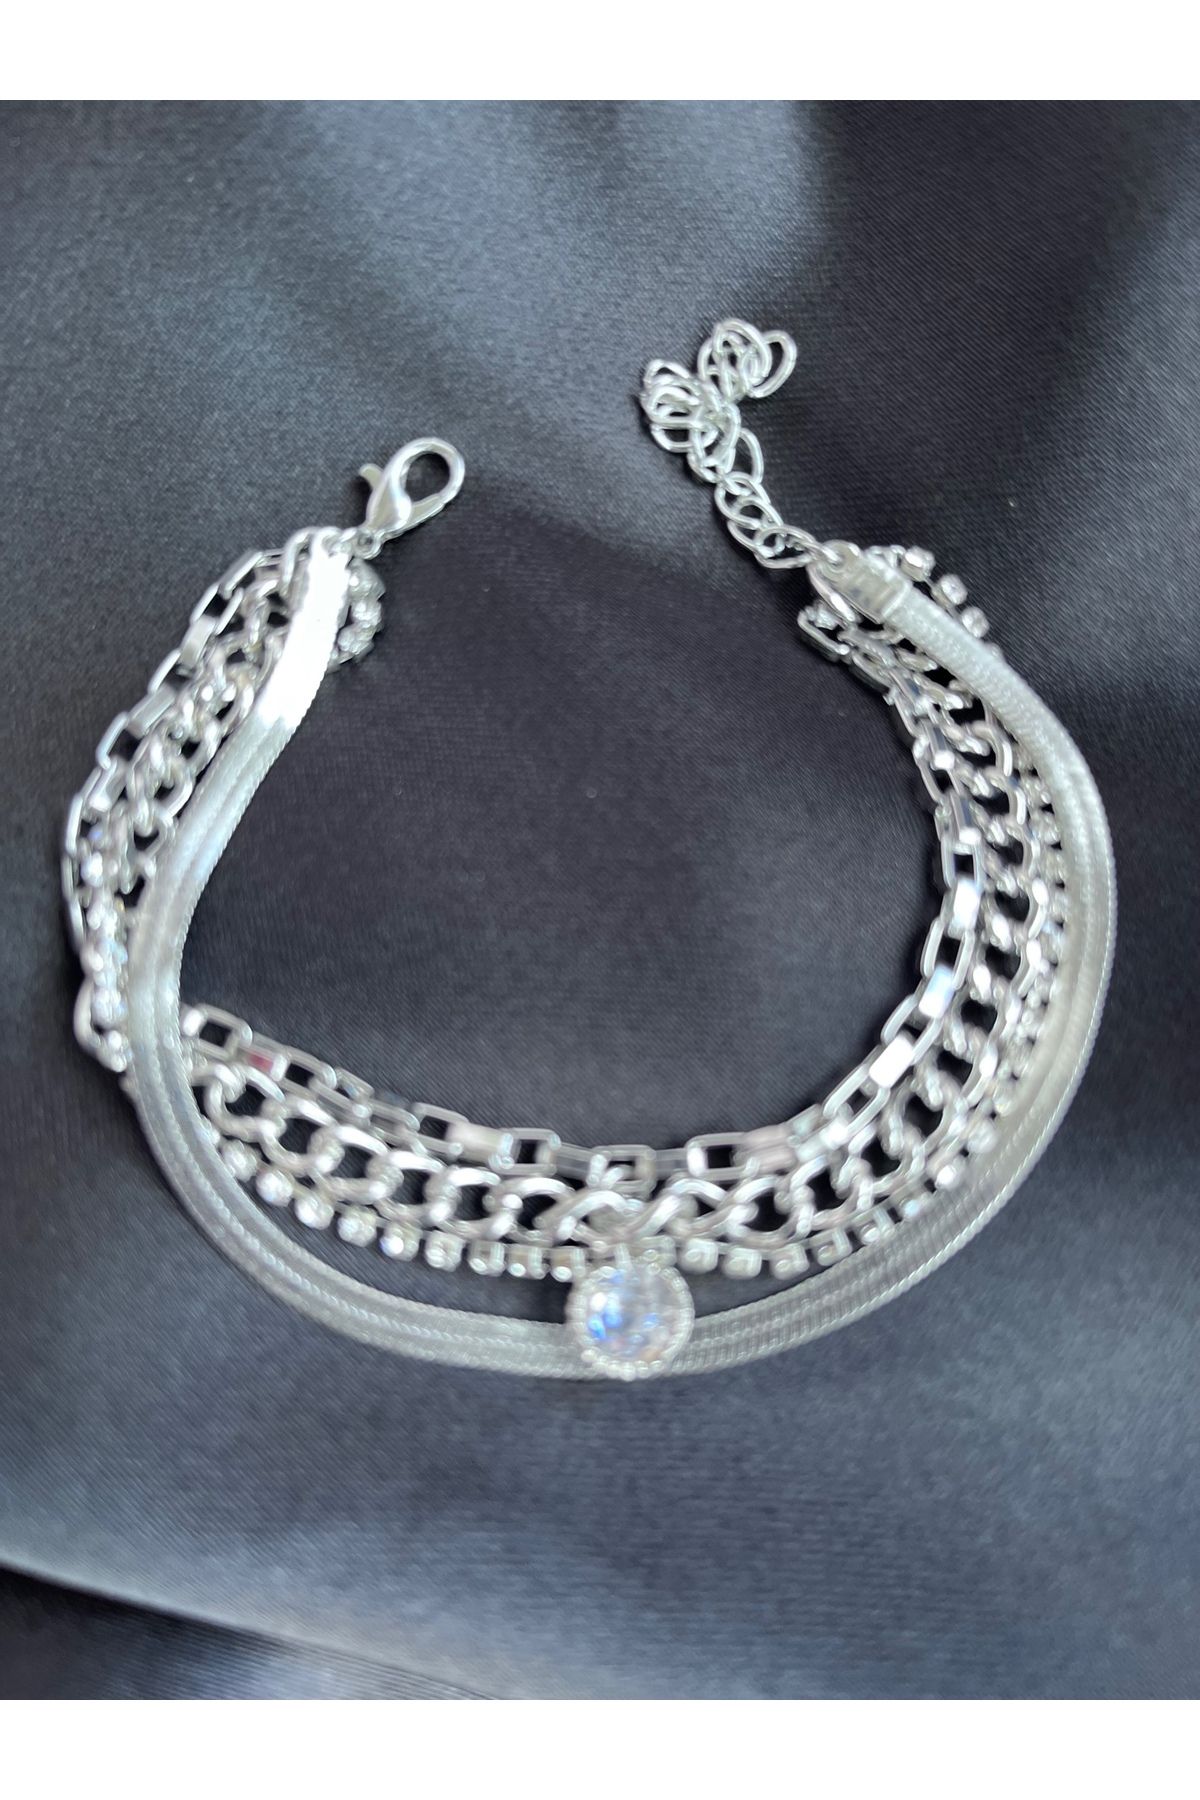 Buy Shree Shobha Collection Silver Bangle Bracelet For Womens Chandi Ka  Kada Chudi at Amazon.in